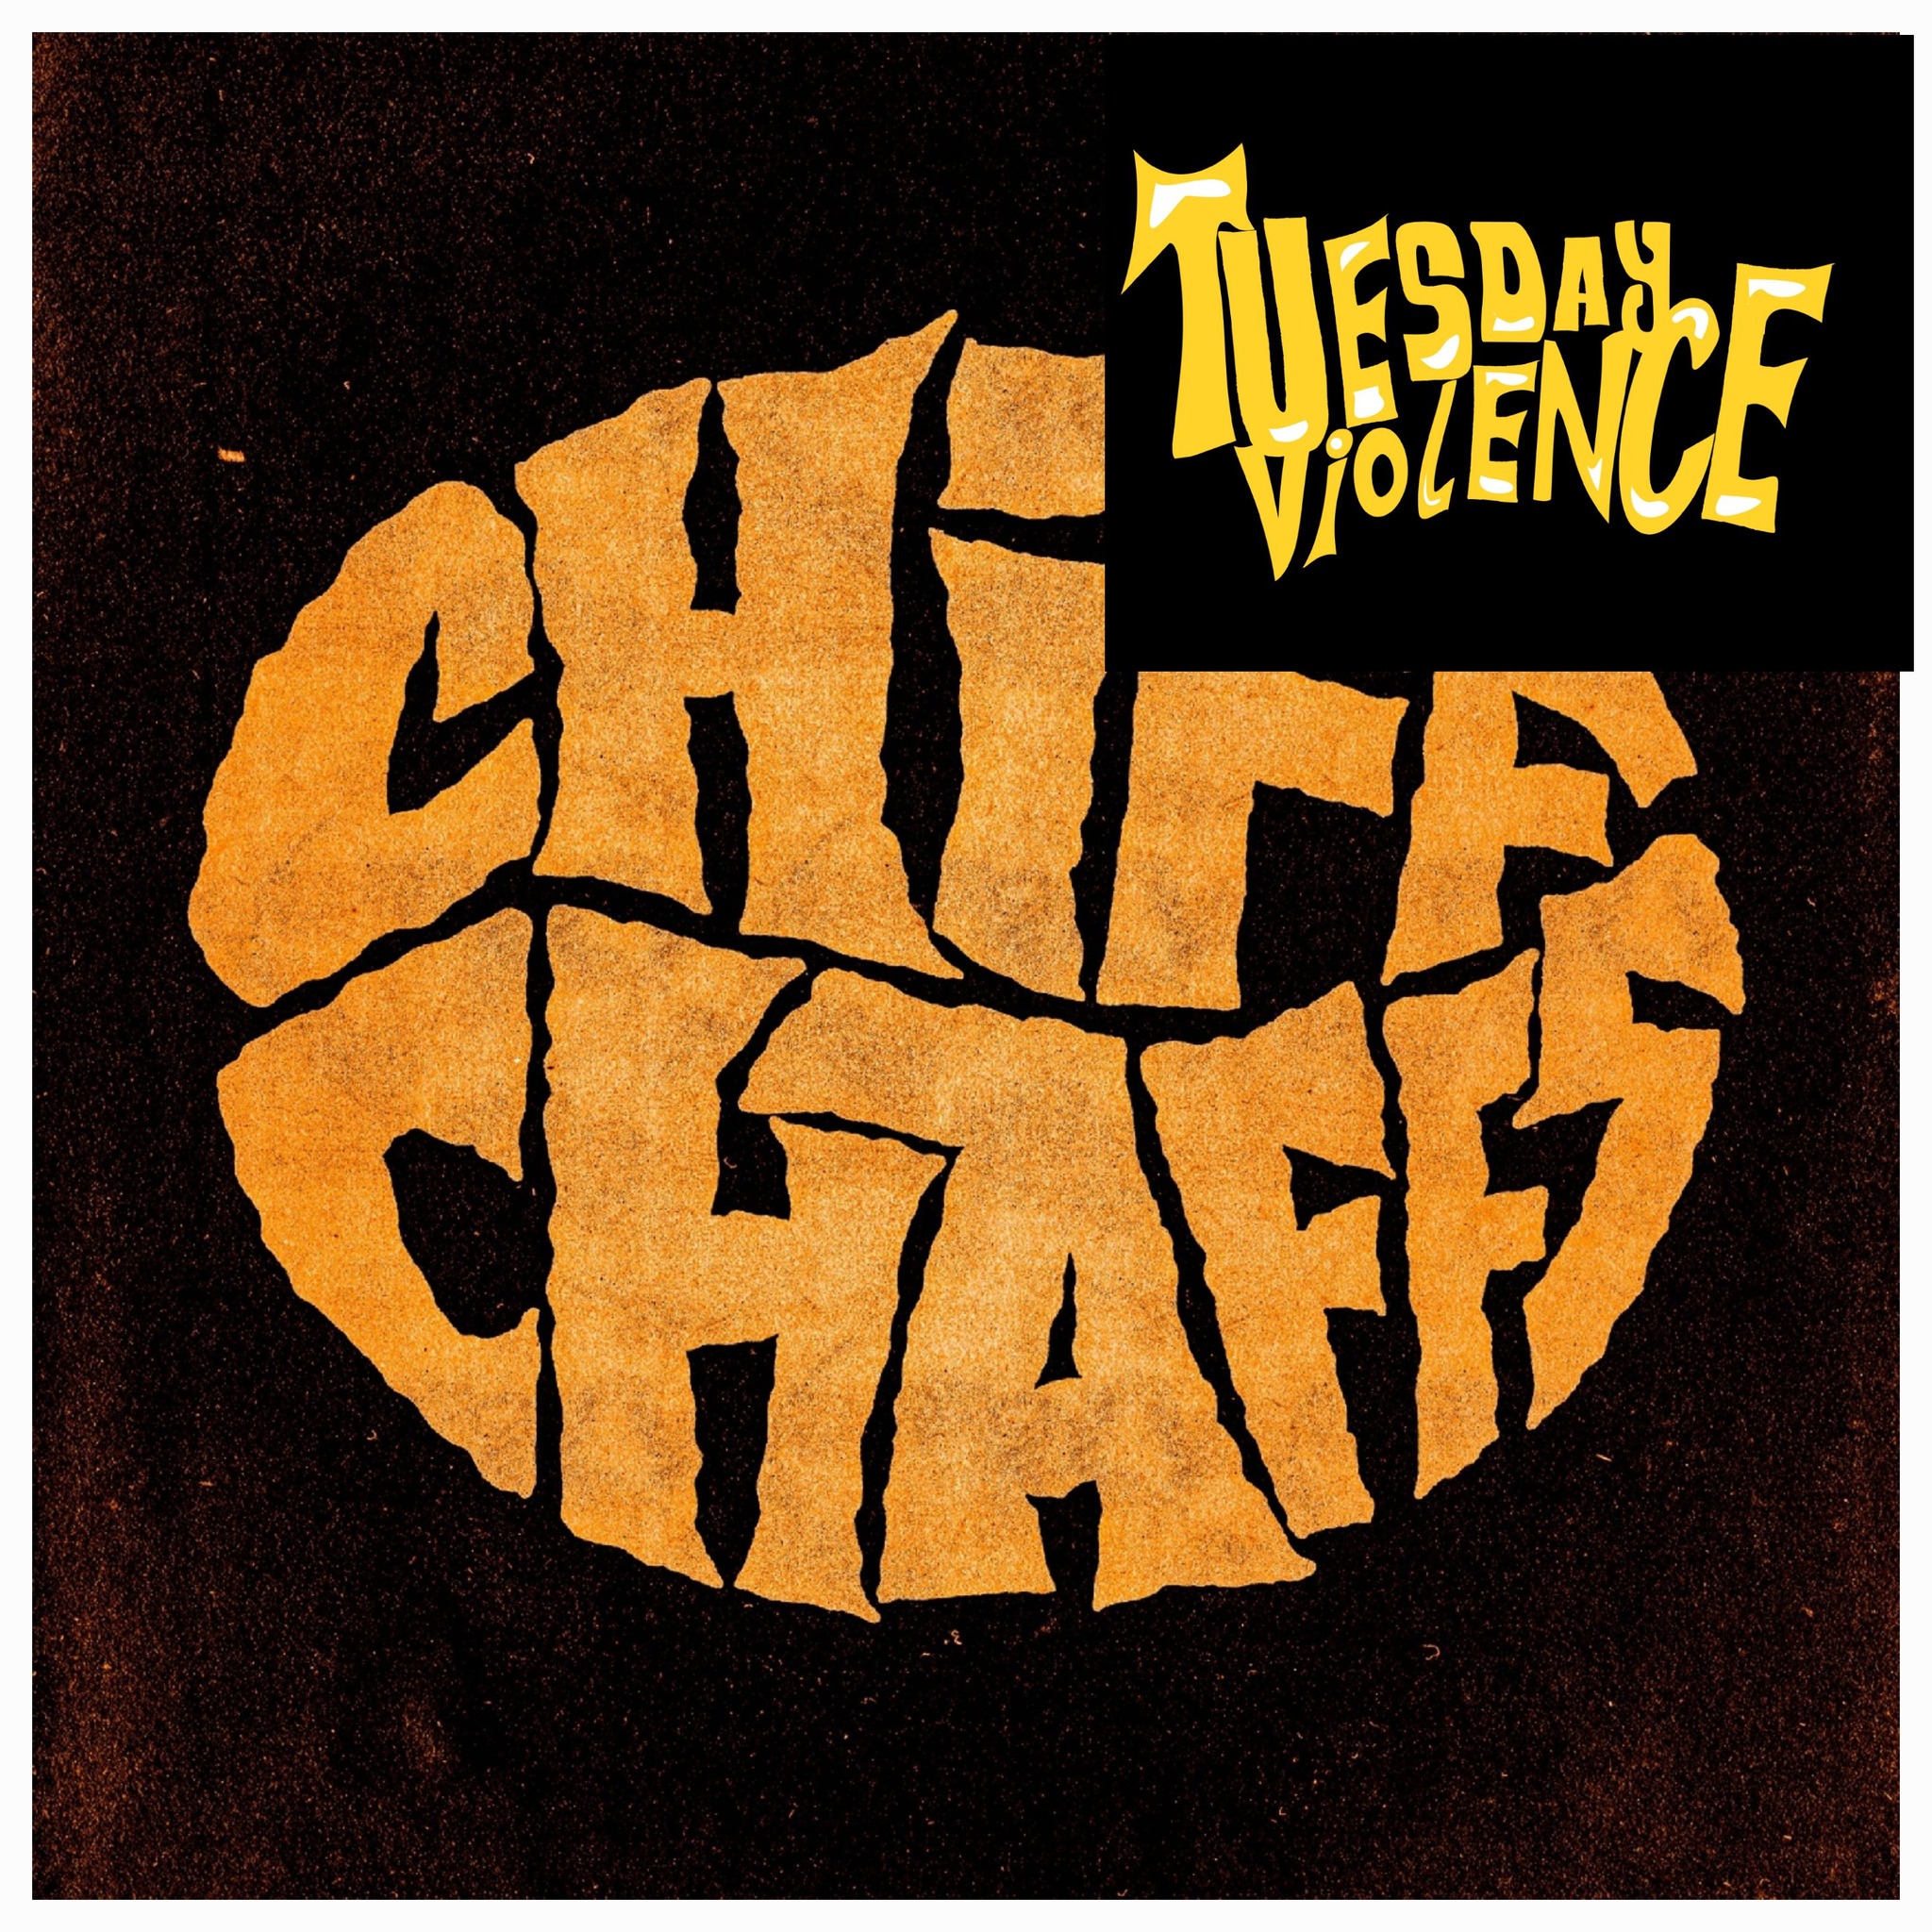 Tuesday Violence Chiff Chaffs logo